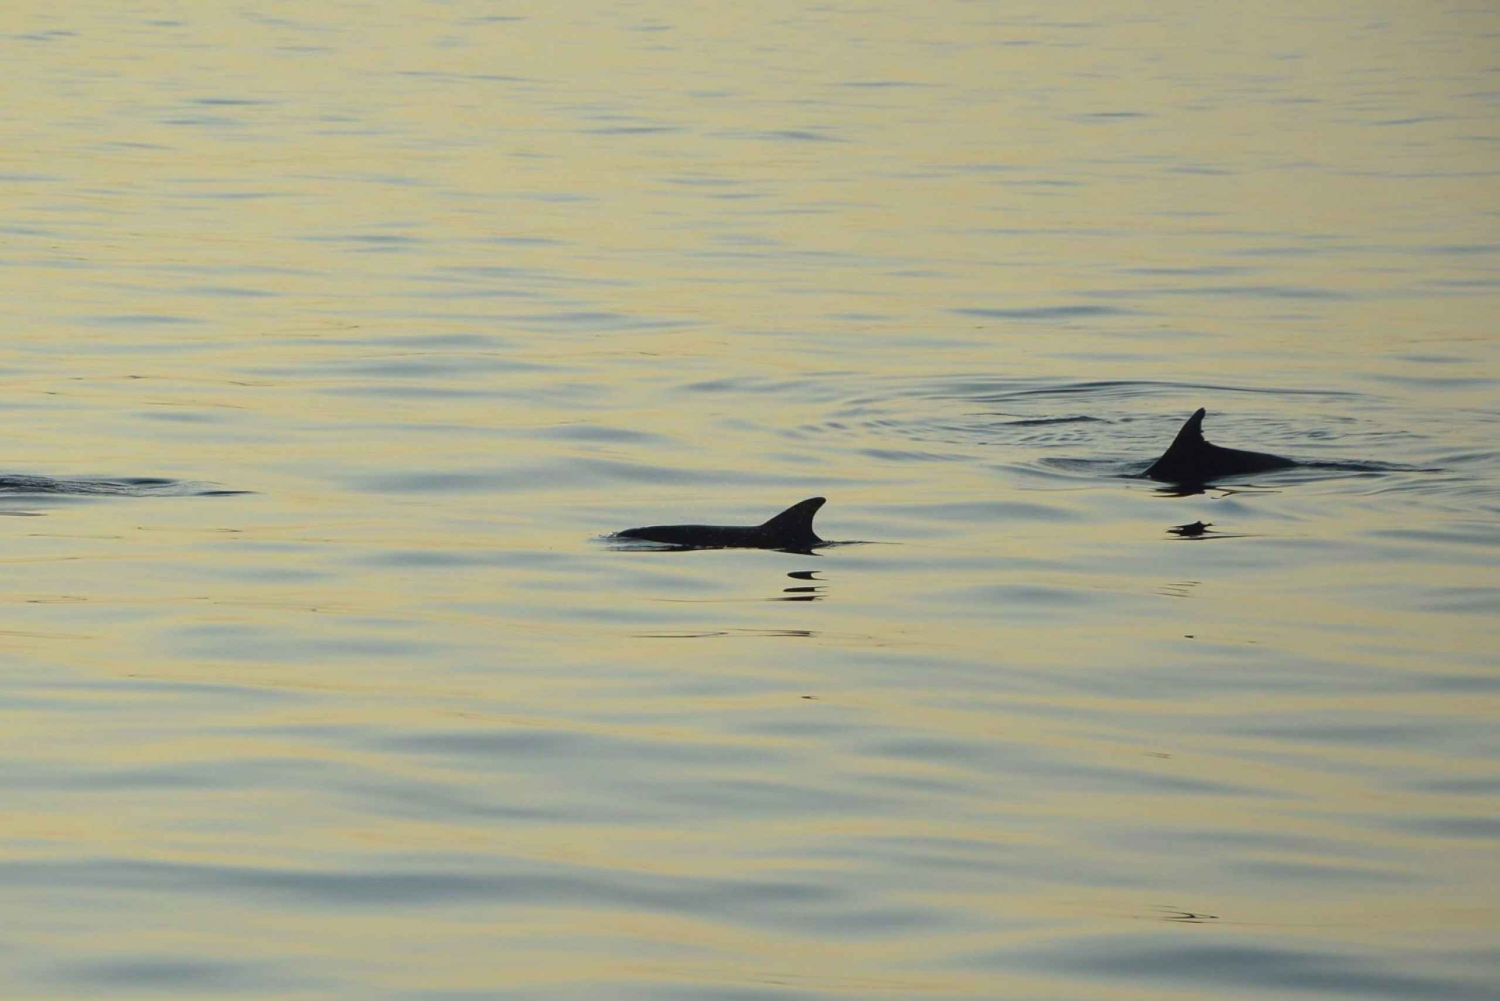 Sunset Dolphin Spotting and Dinner in Medulin Archipelago